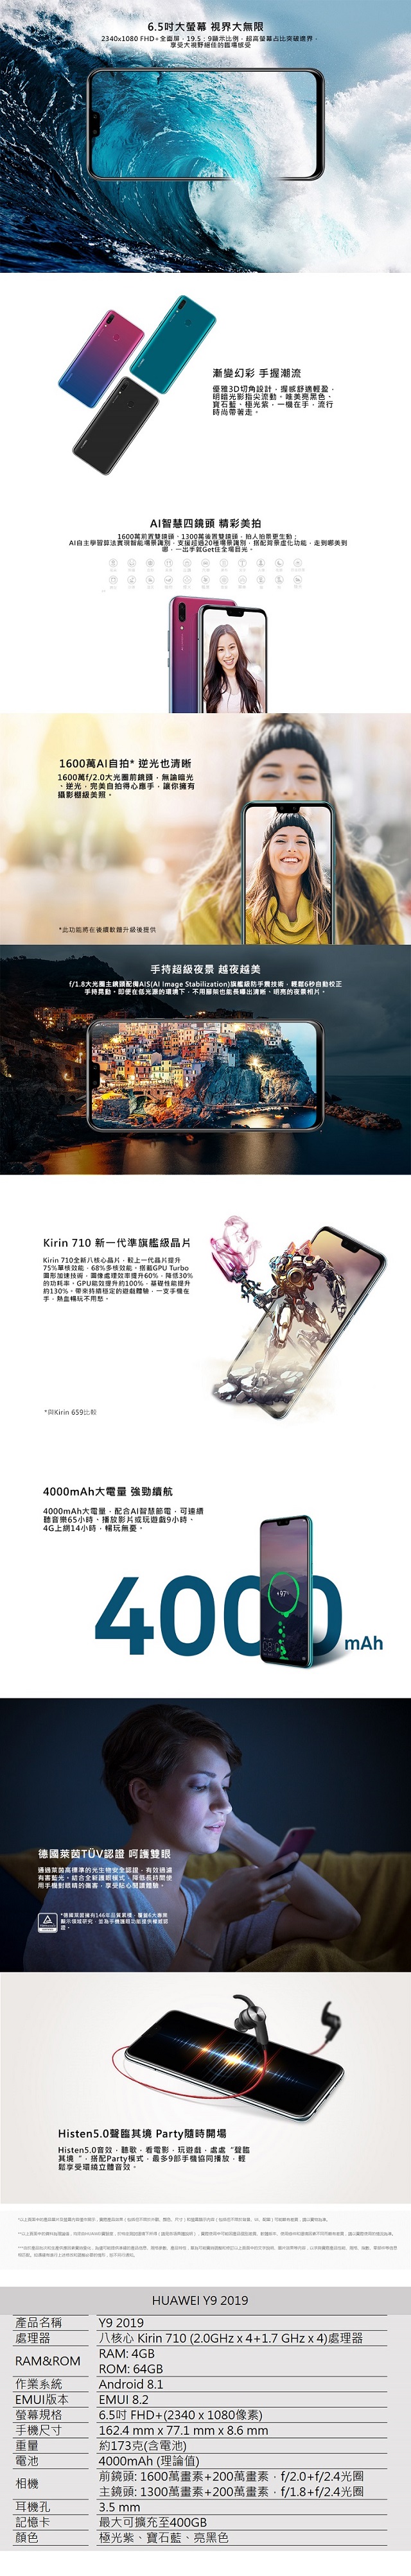 HUAWEI Y9 2019 6.5 吋八核心(4G/64G)智慧型手機